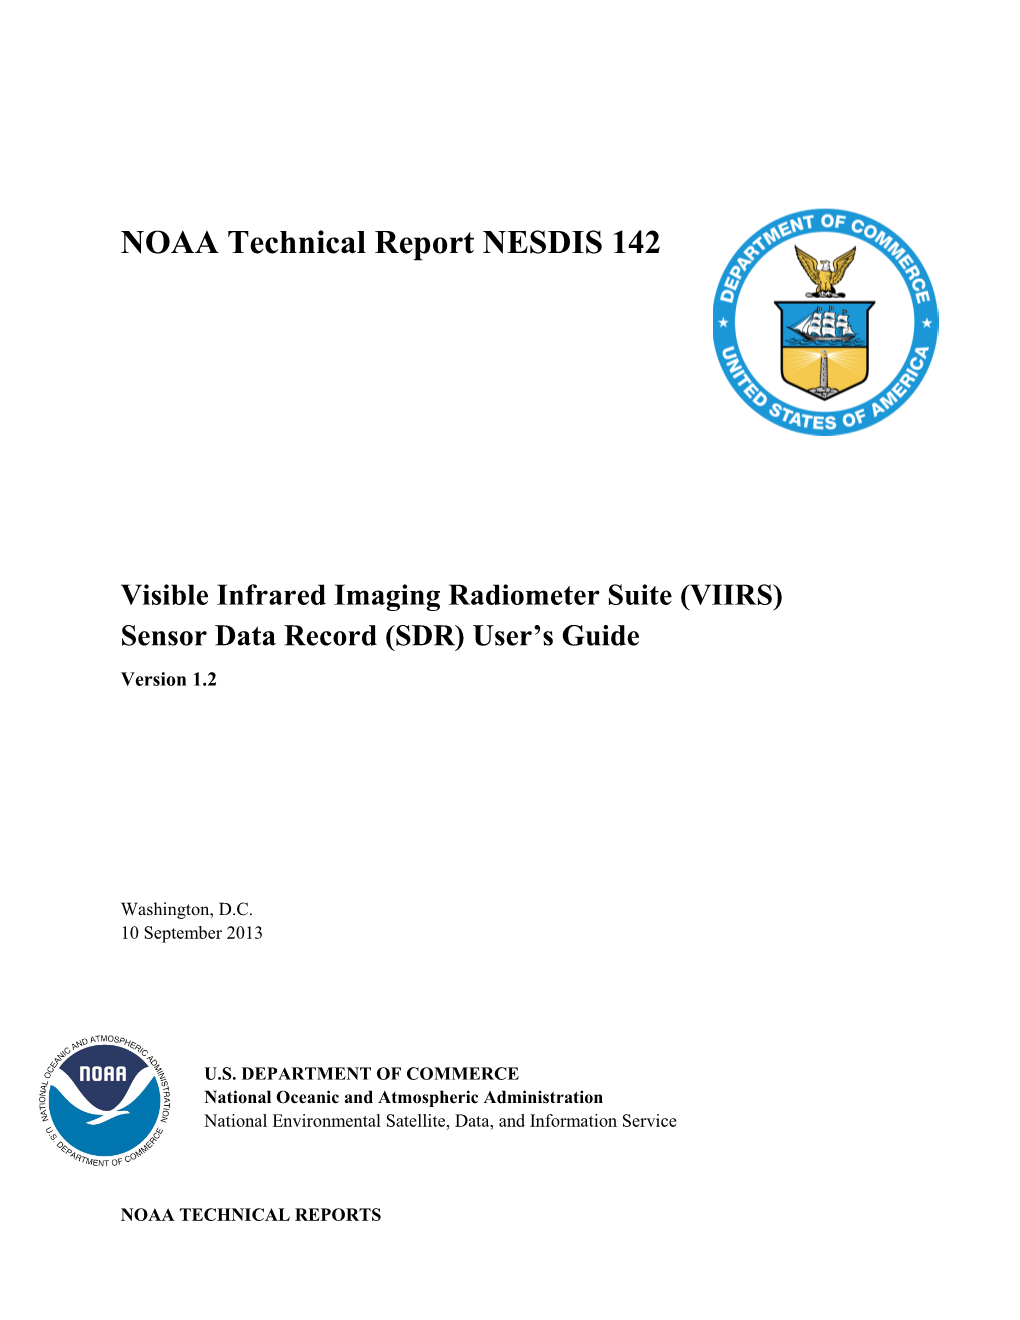 VIIRS) Sensor Data Record (SDR) User's Guide (Version 1.2